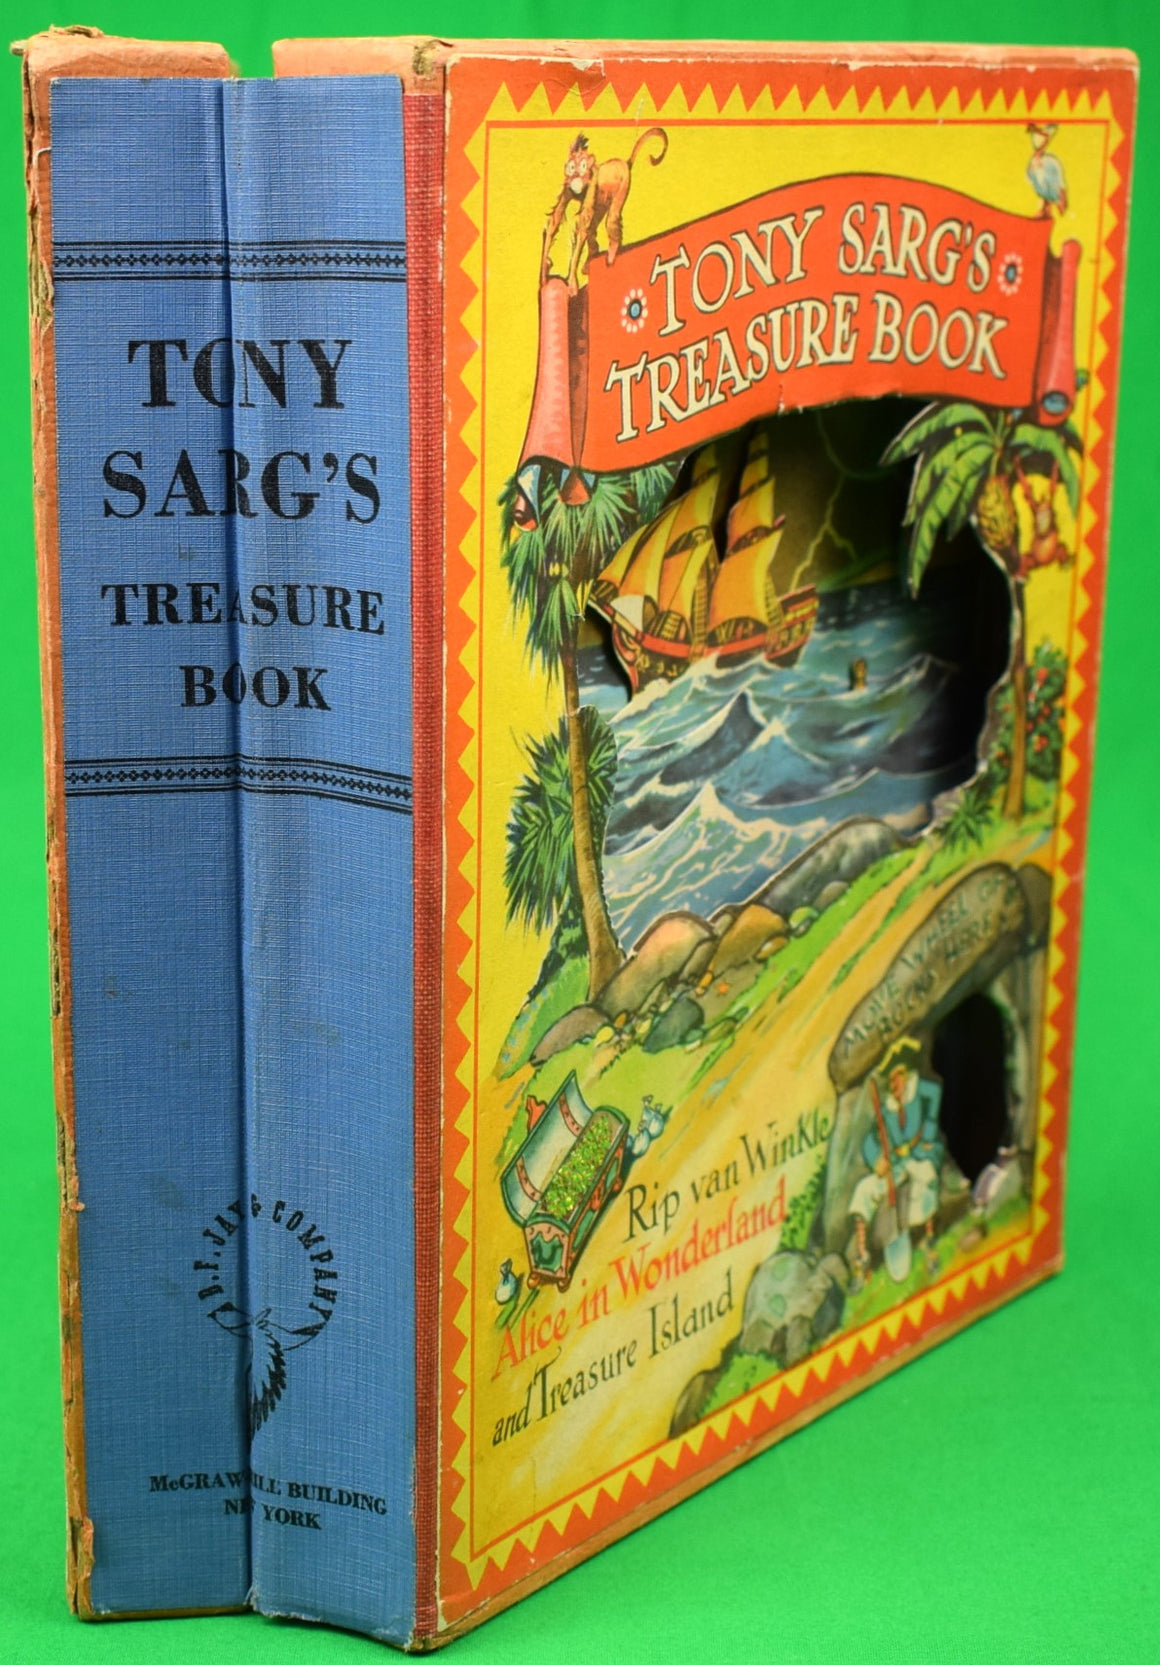 "Tony Sarg's Treasure Book" 1942